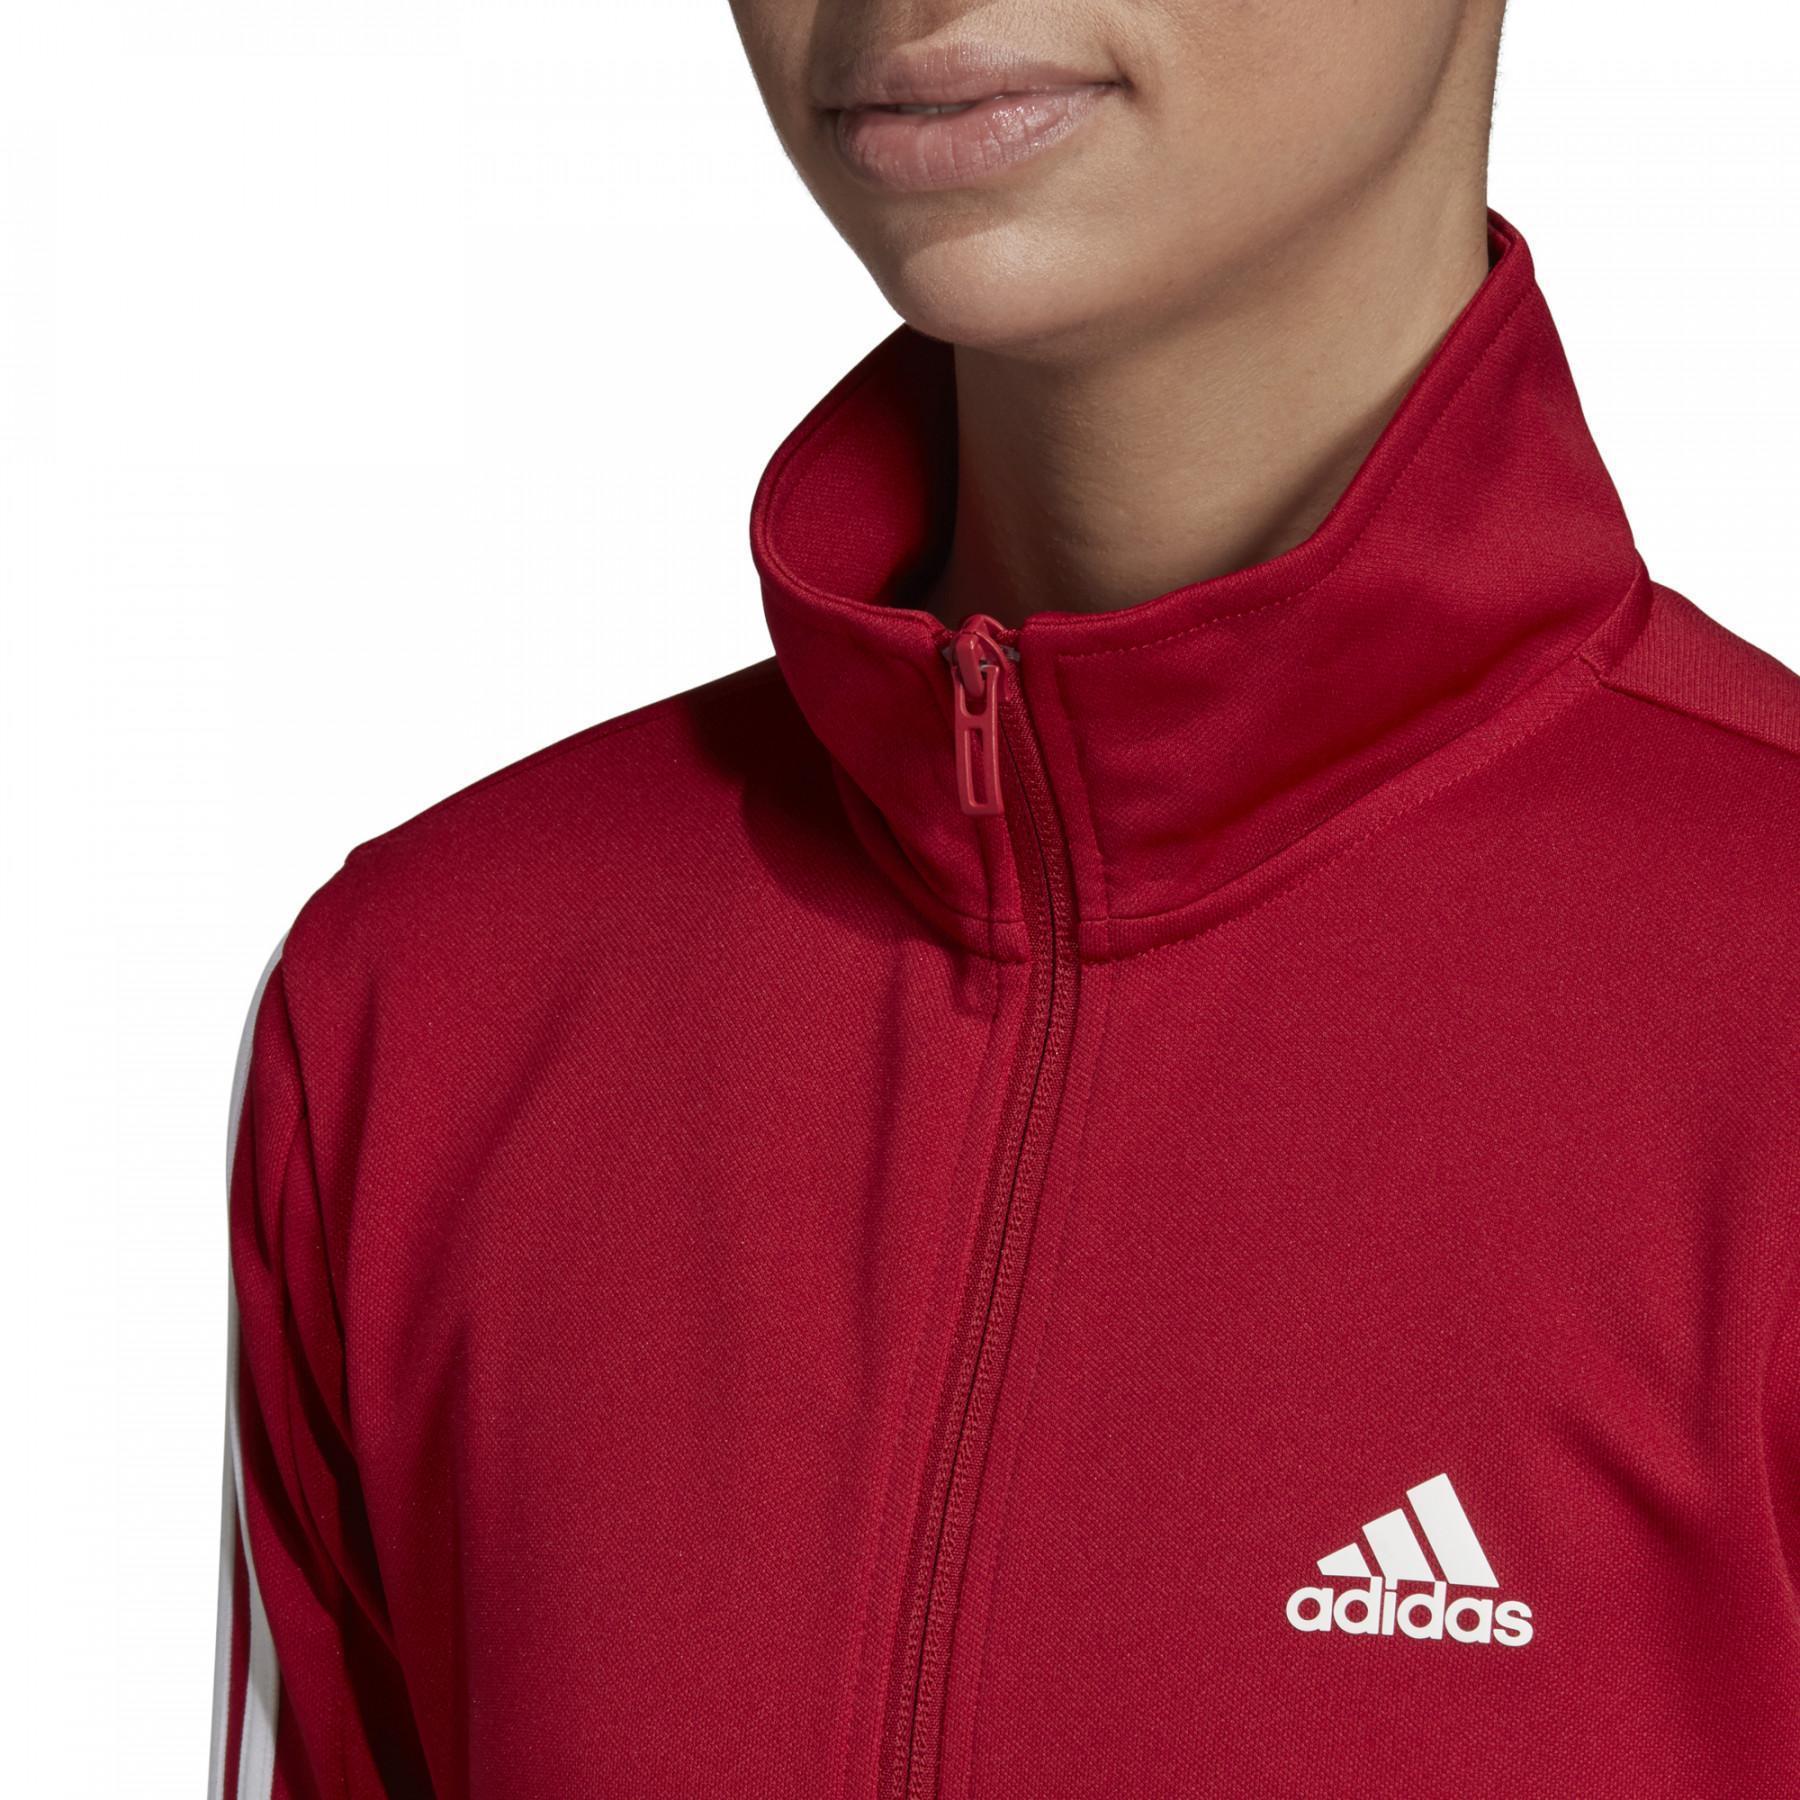 Damen-Trainingsanzug adidas Team Sports